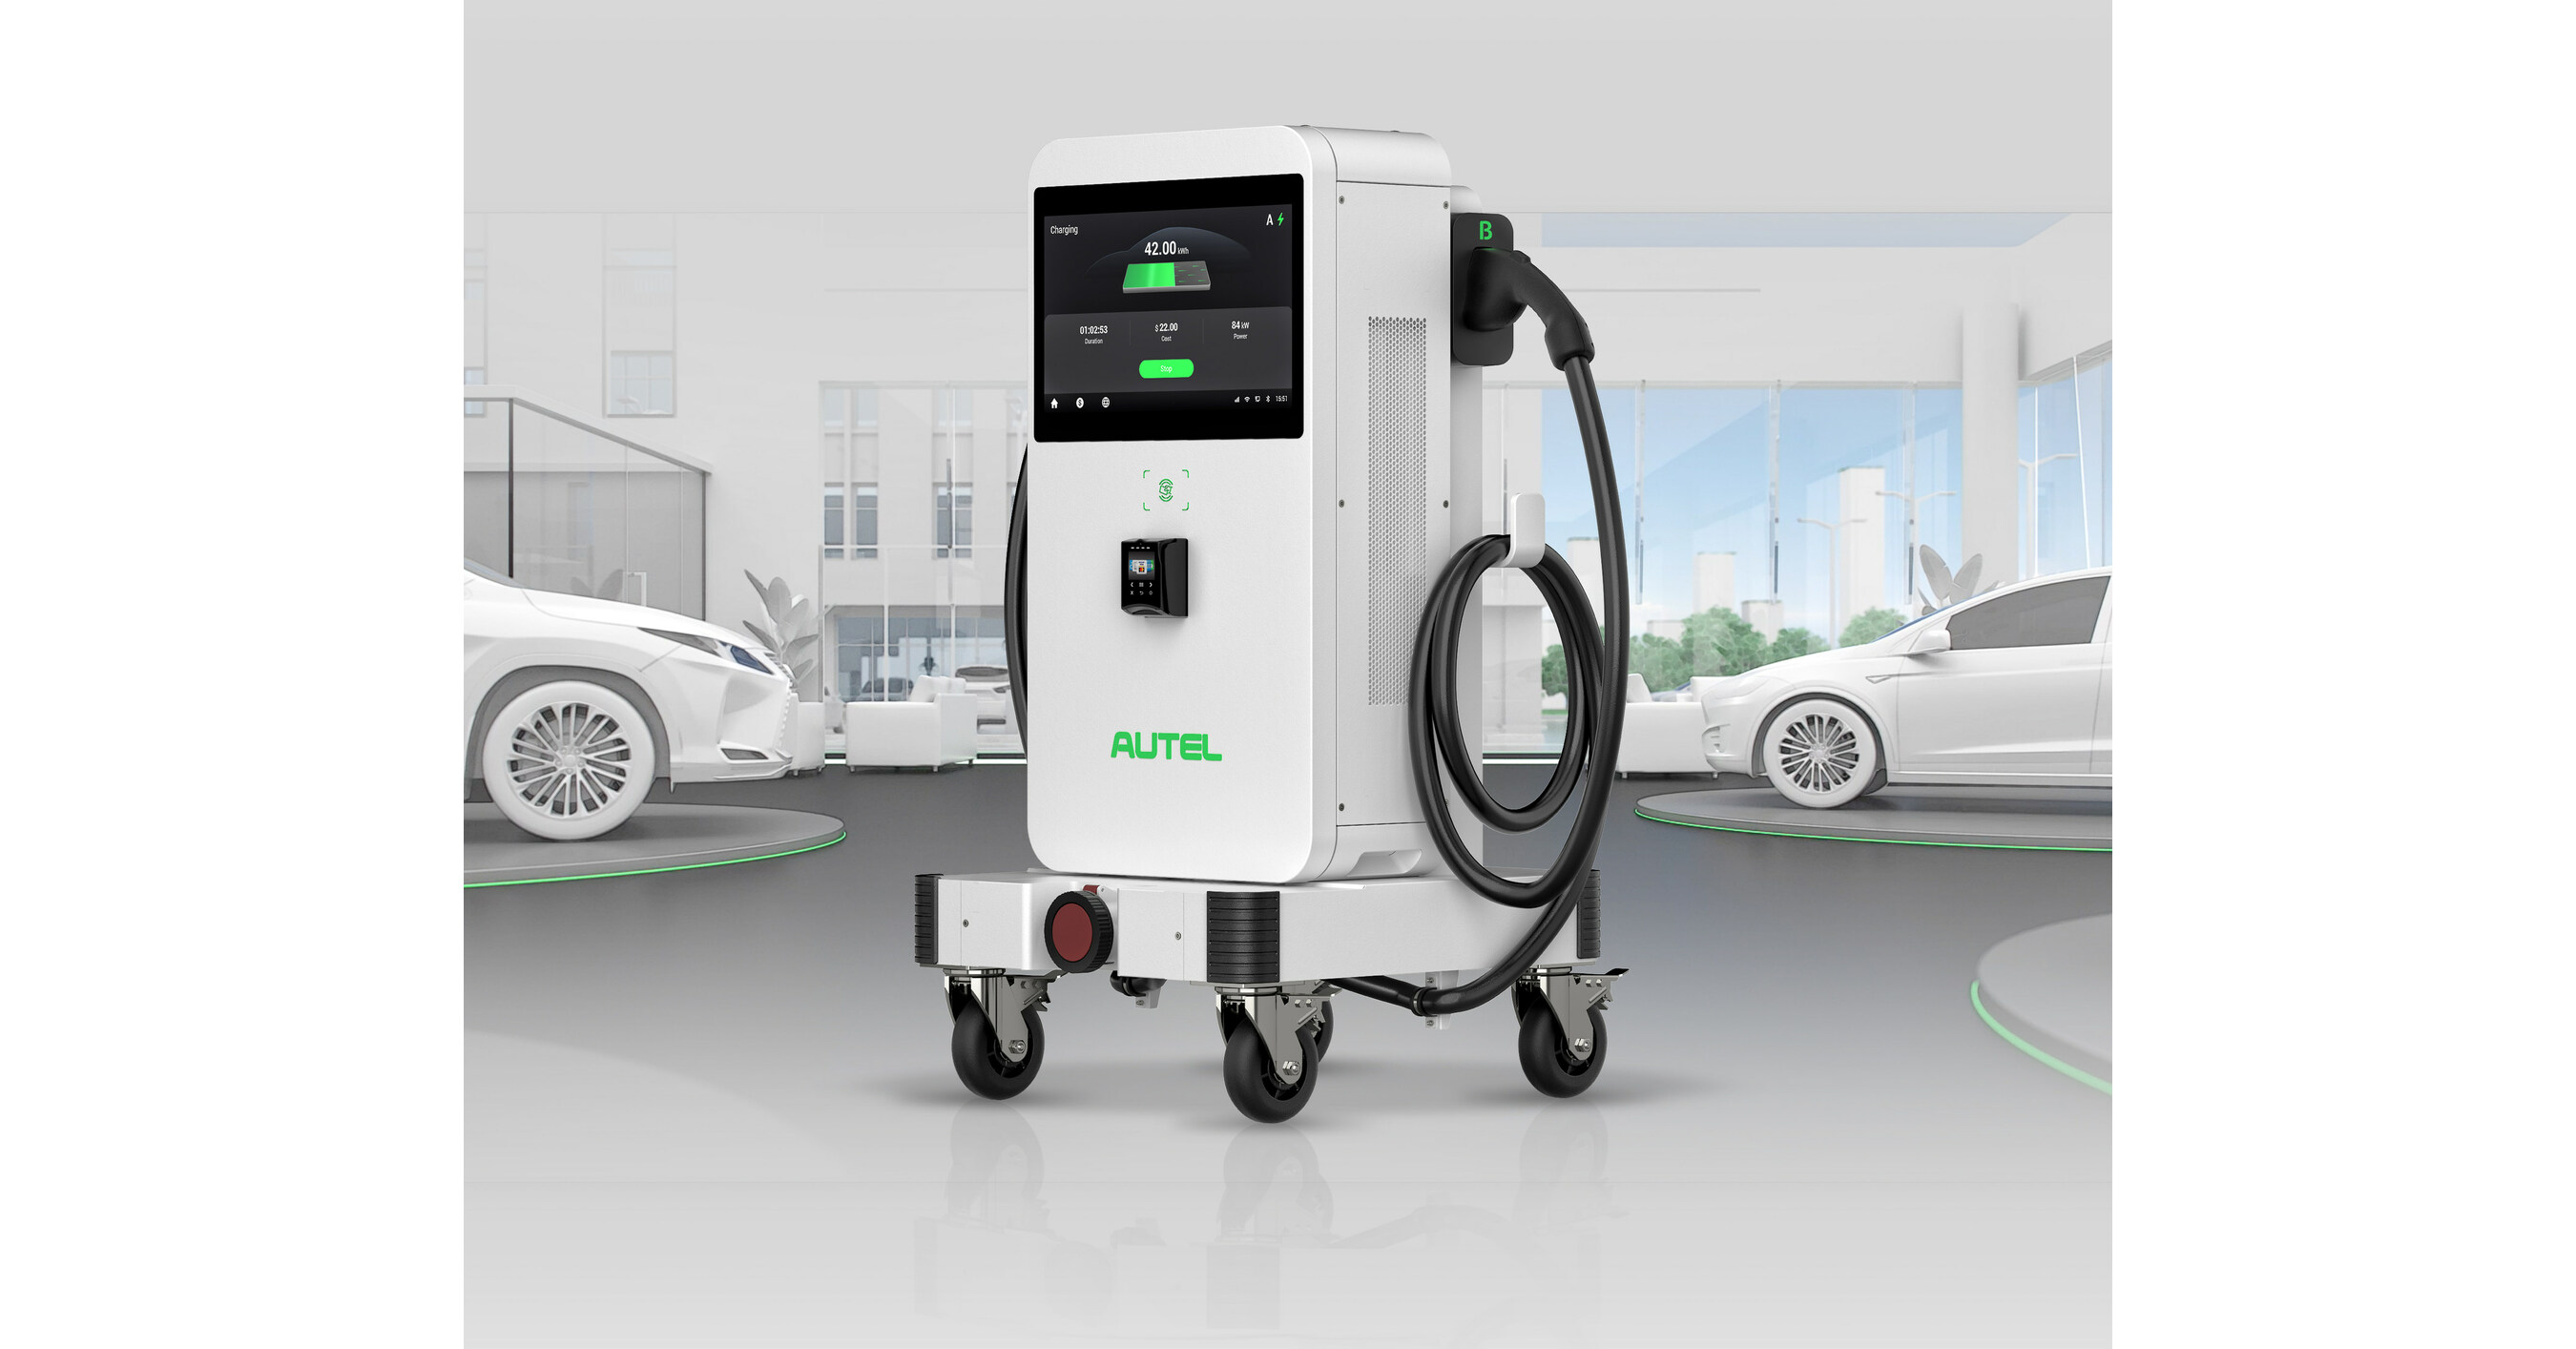 EV charging station manufacturer chooses North Carolina to build equipment